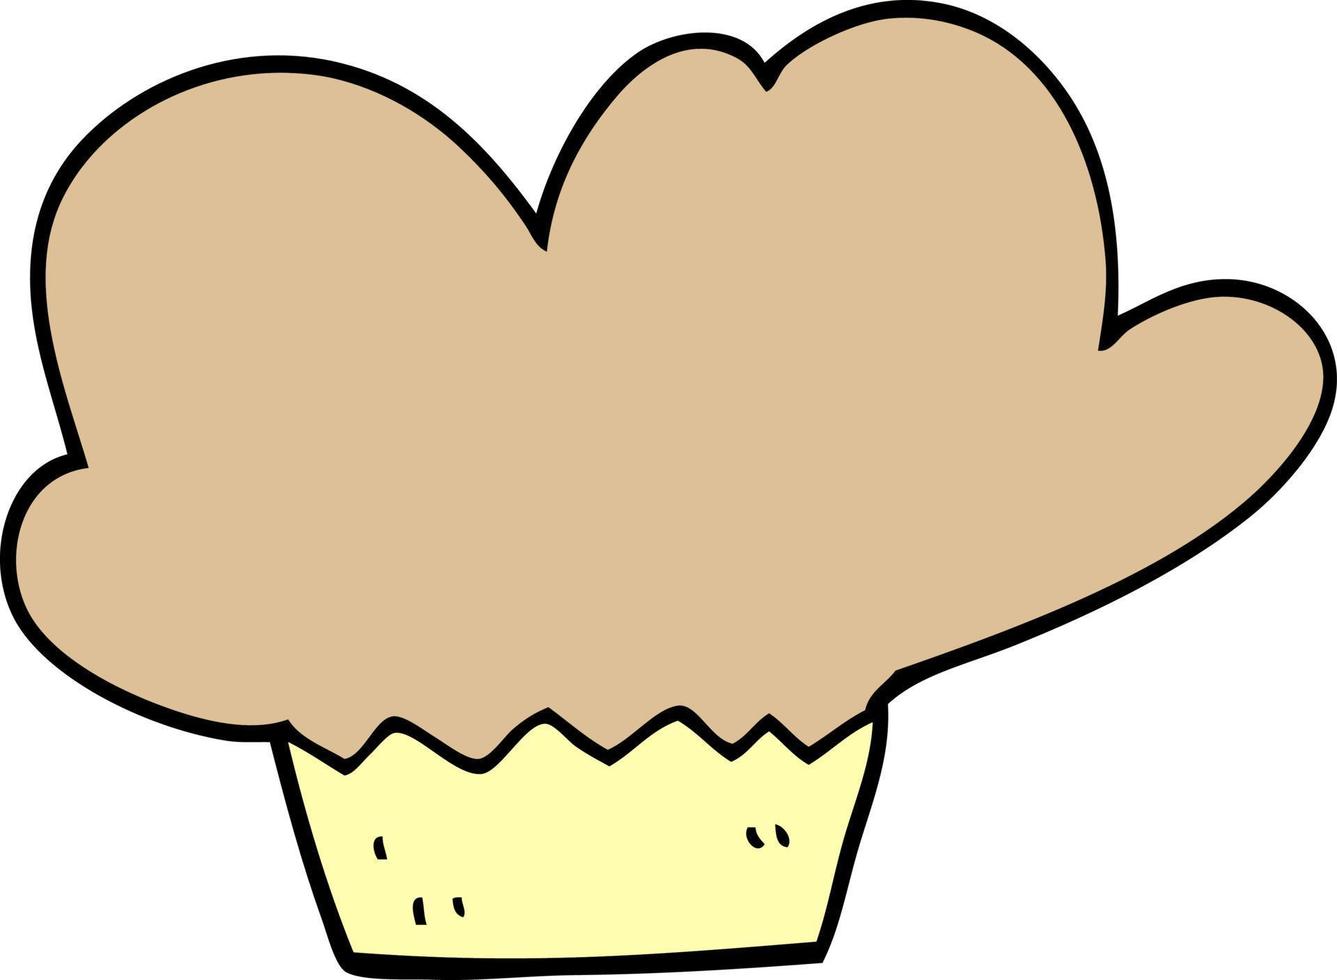 cartoon doodle muffin vector